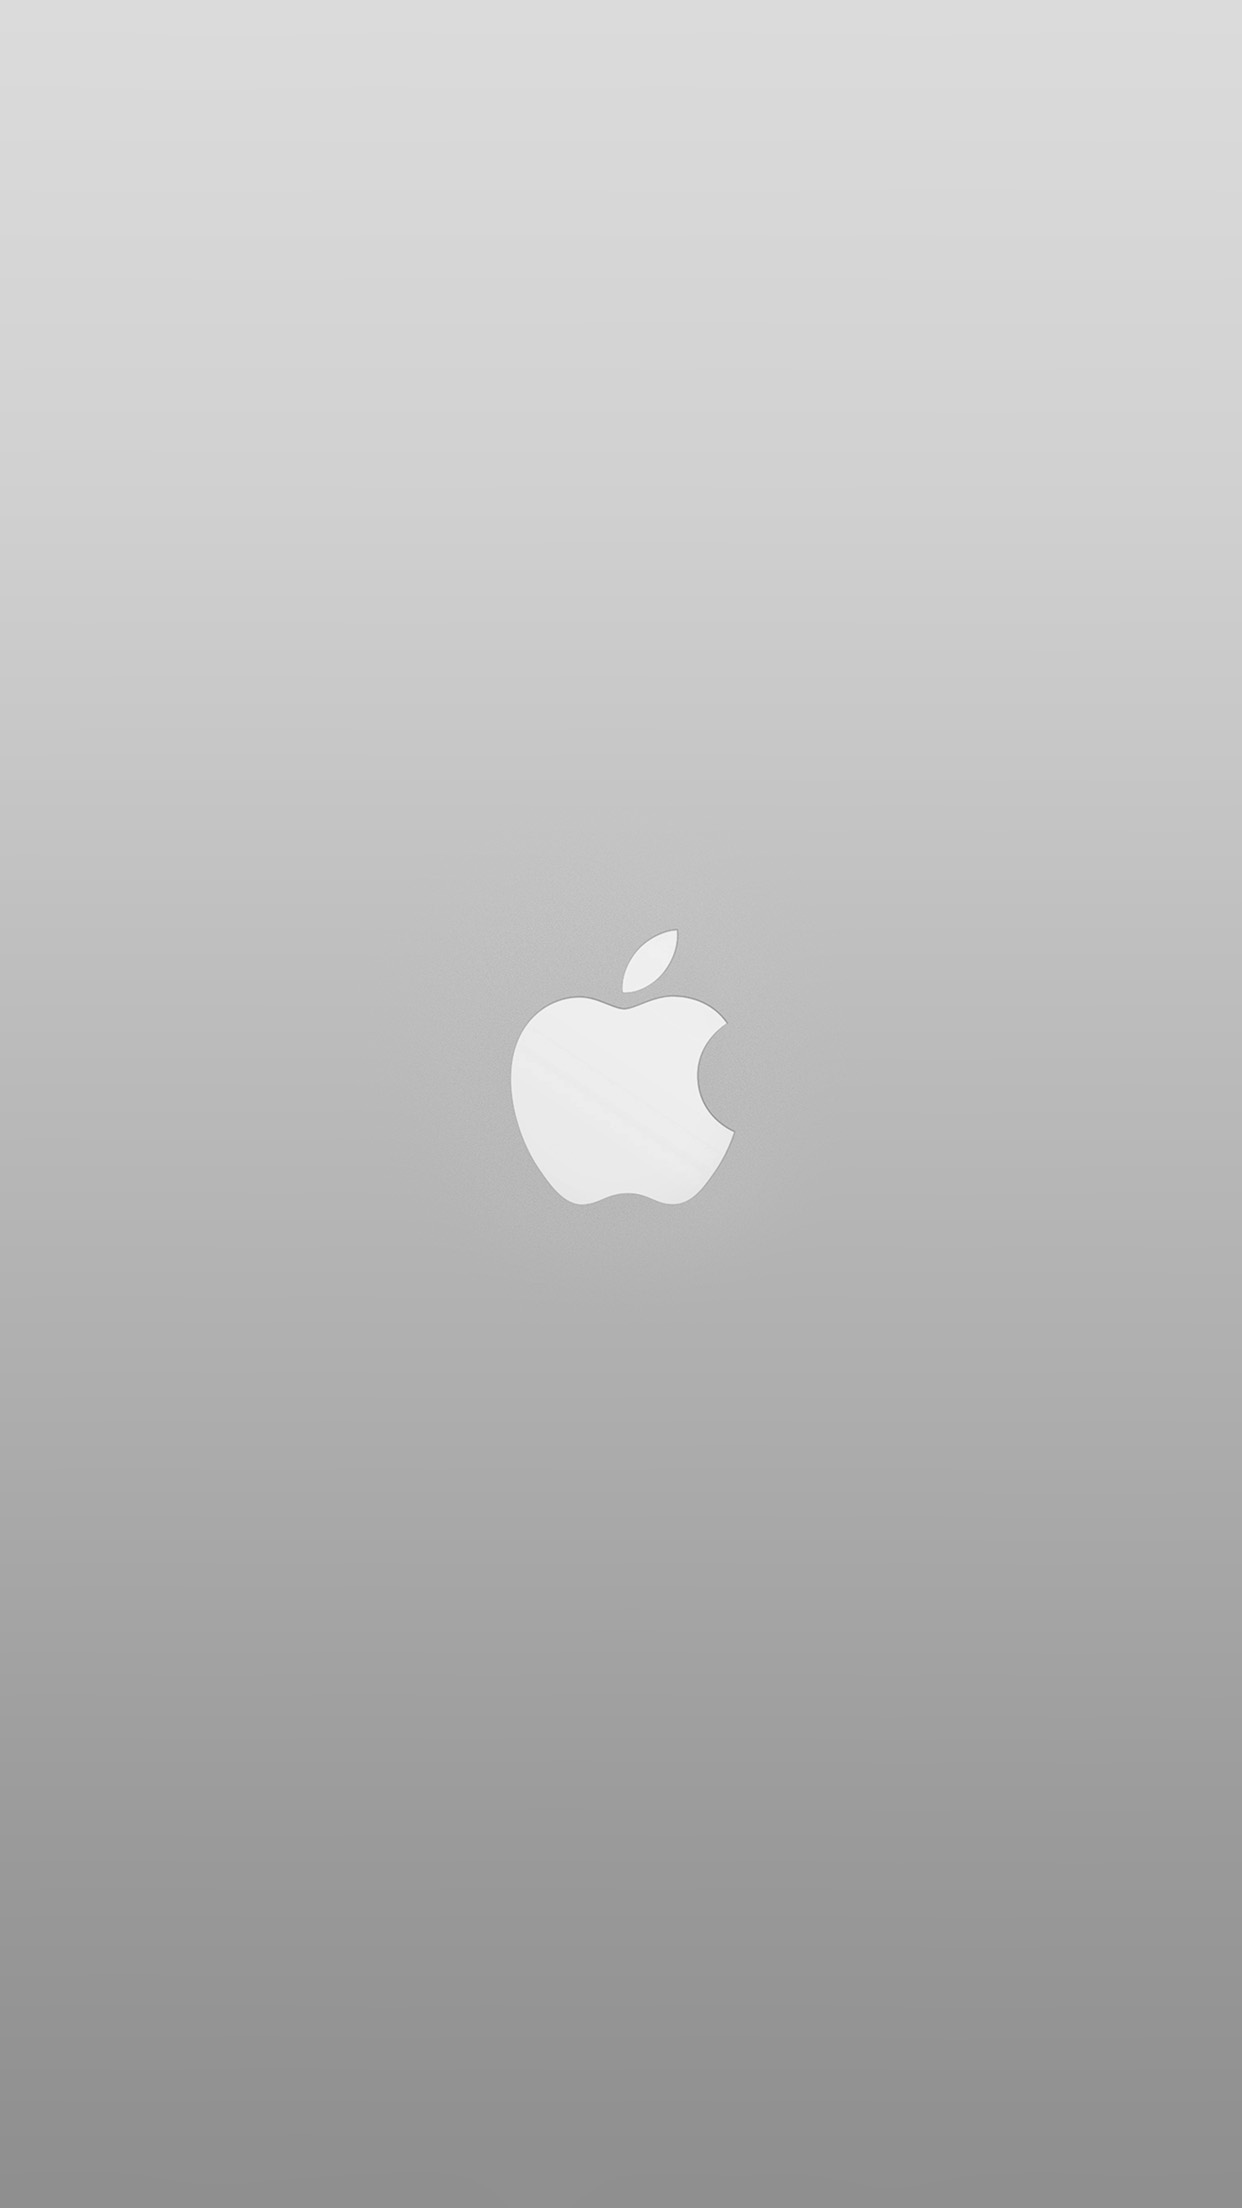 Logo Apple White Minimal Illustration Art Color Gray Android wallpaper